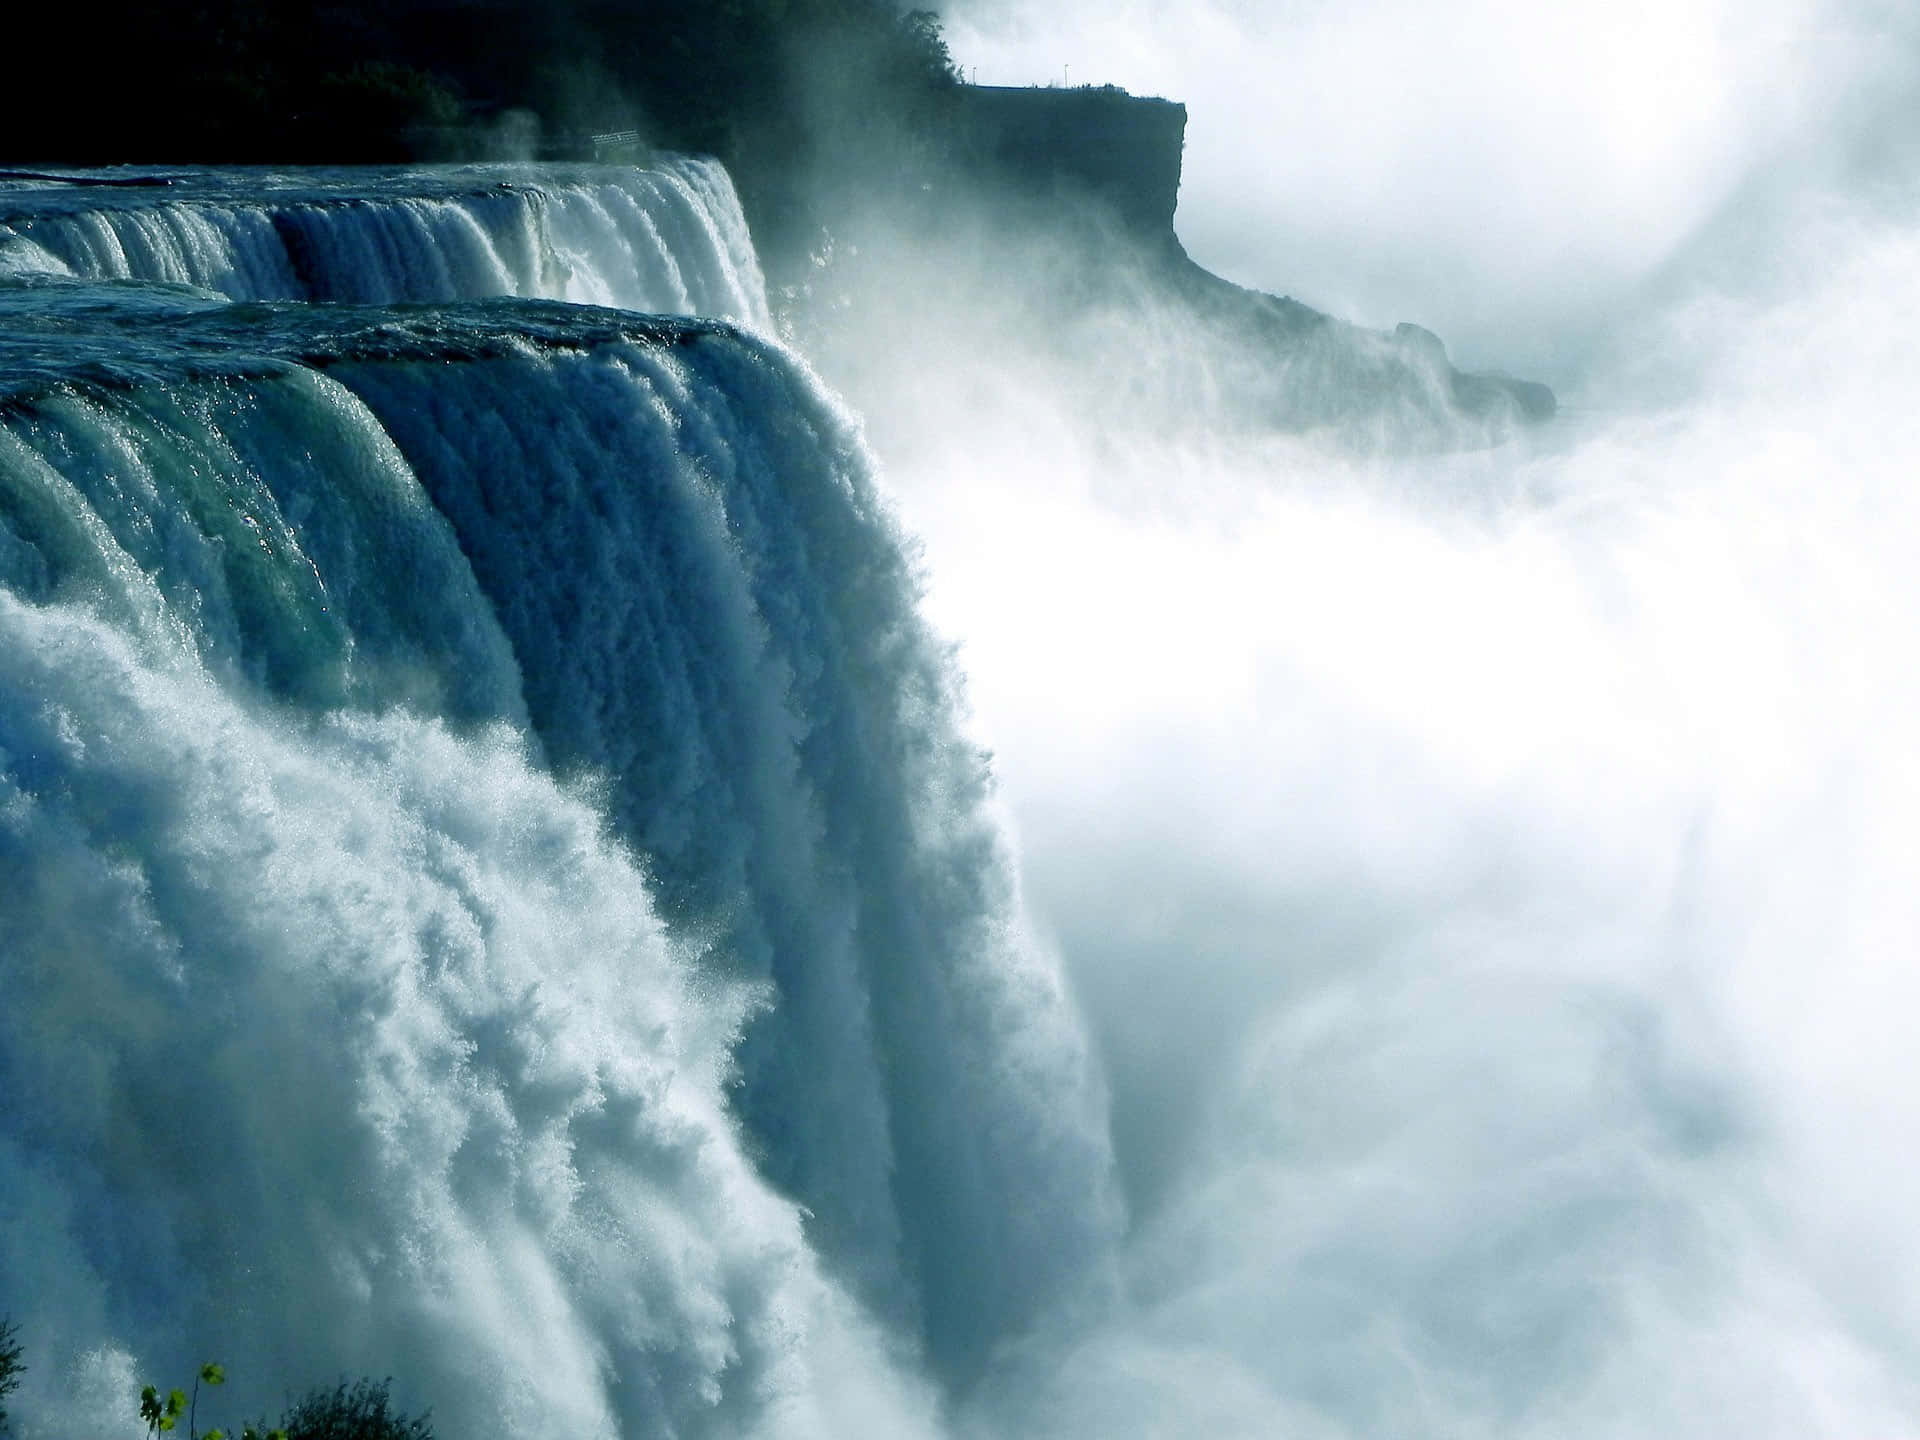 Enjoy the stunning view of Niagara Falls!